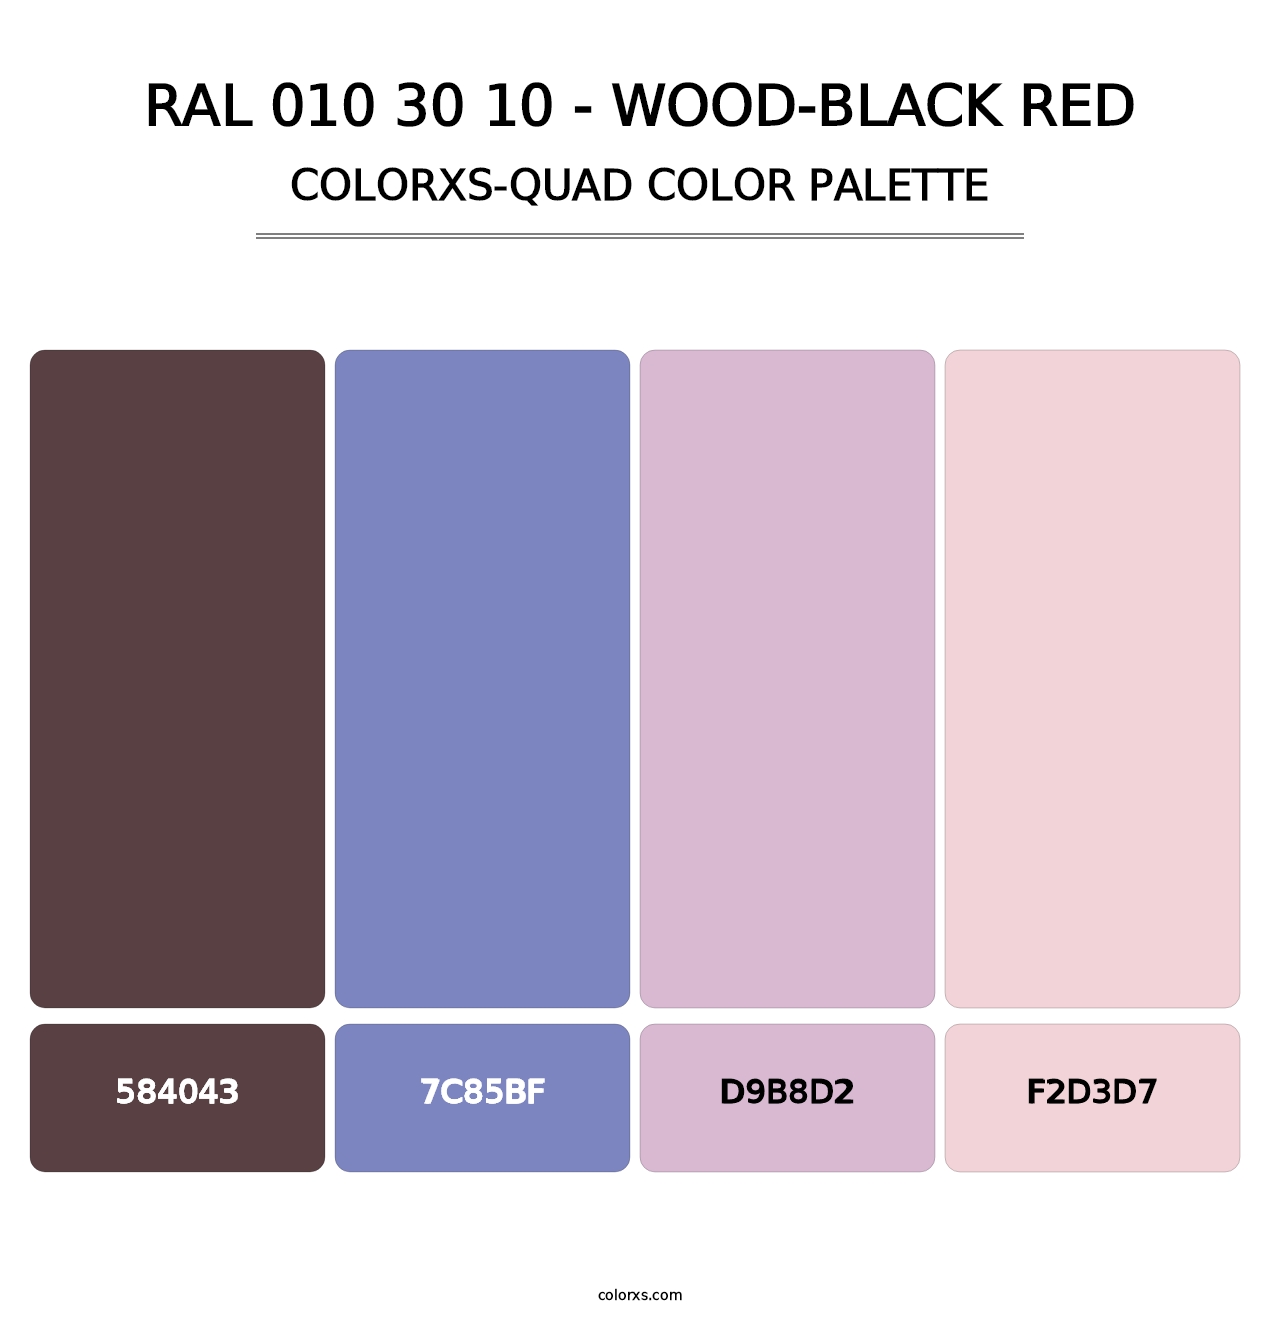 RAL 010 30 10 - Wood-Black Red - Colorxs Quad Palette